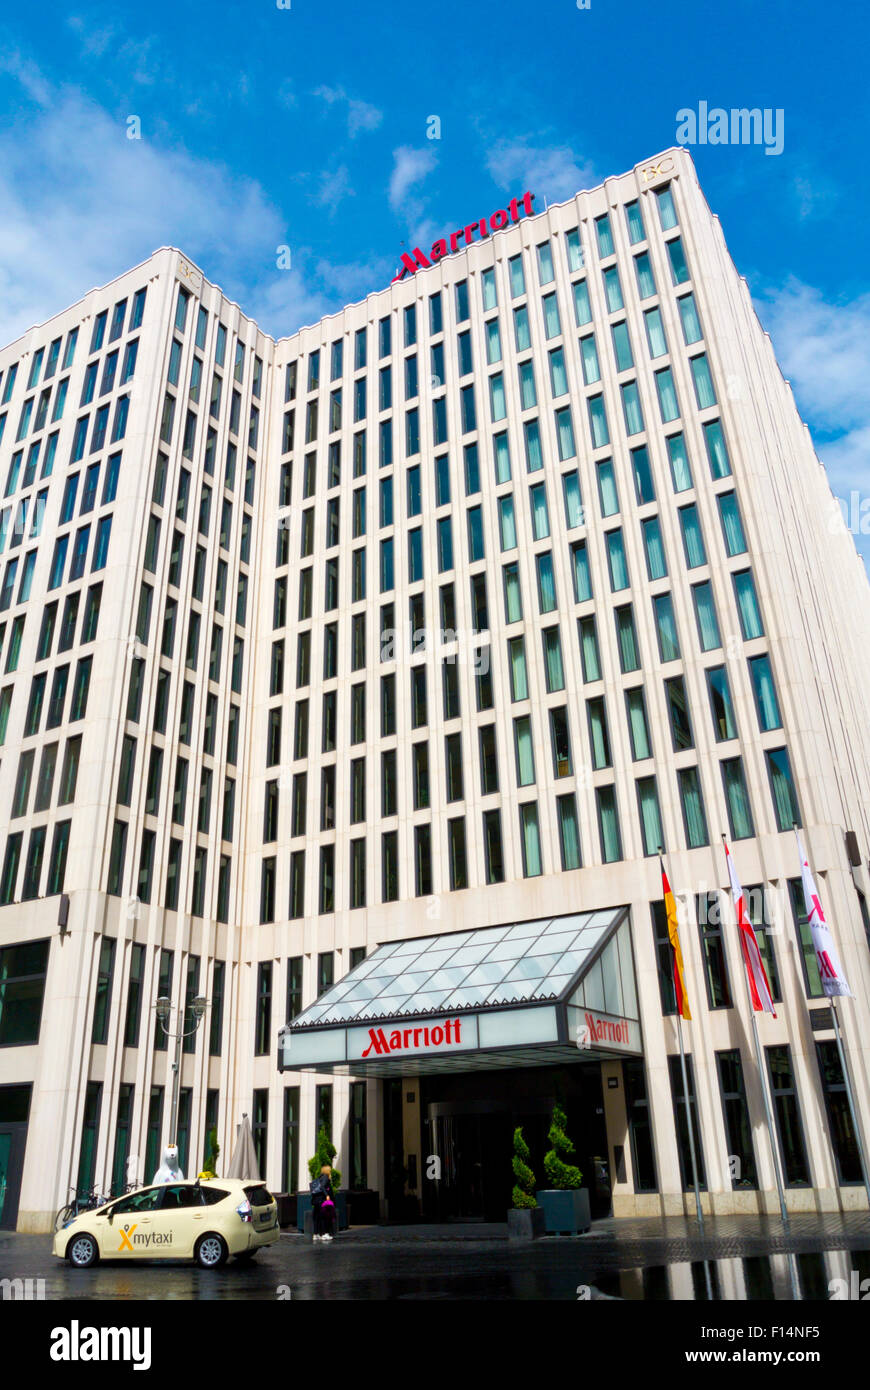 Hôtel Marriott, Potsdamer Platz, Berlin, Allemagne Banque D'Images